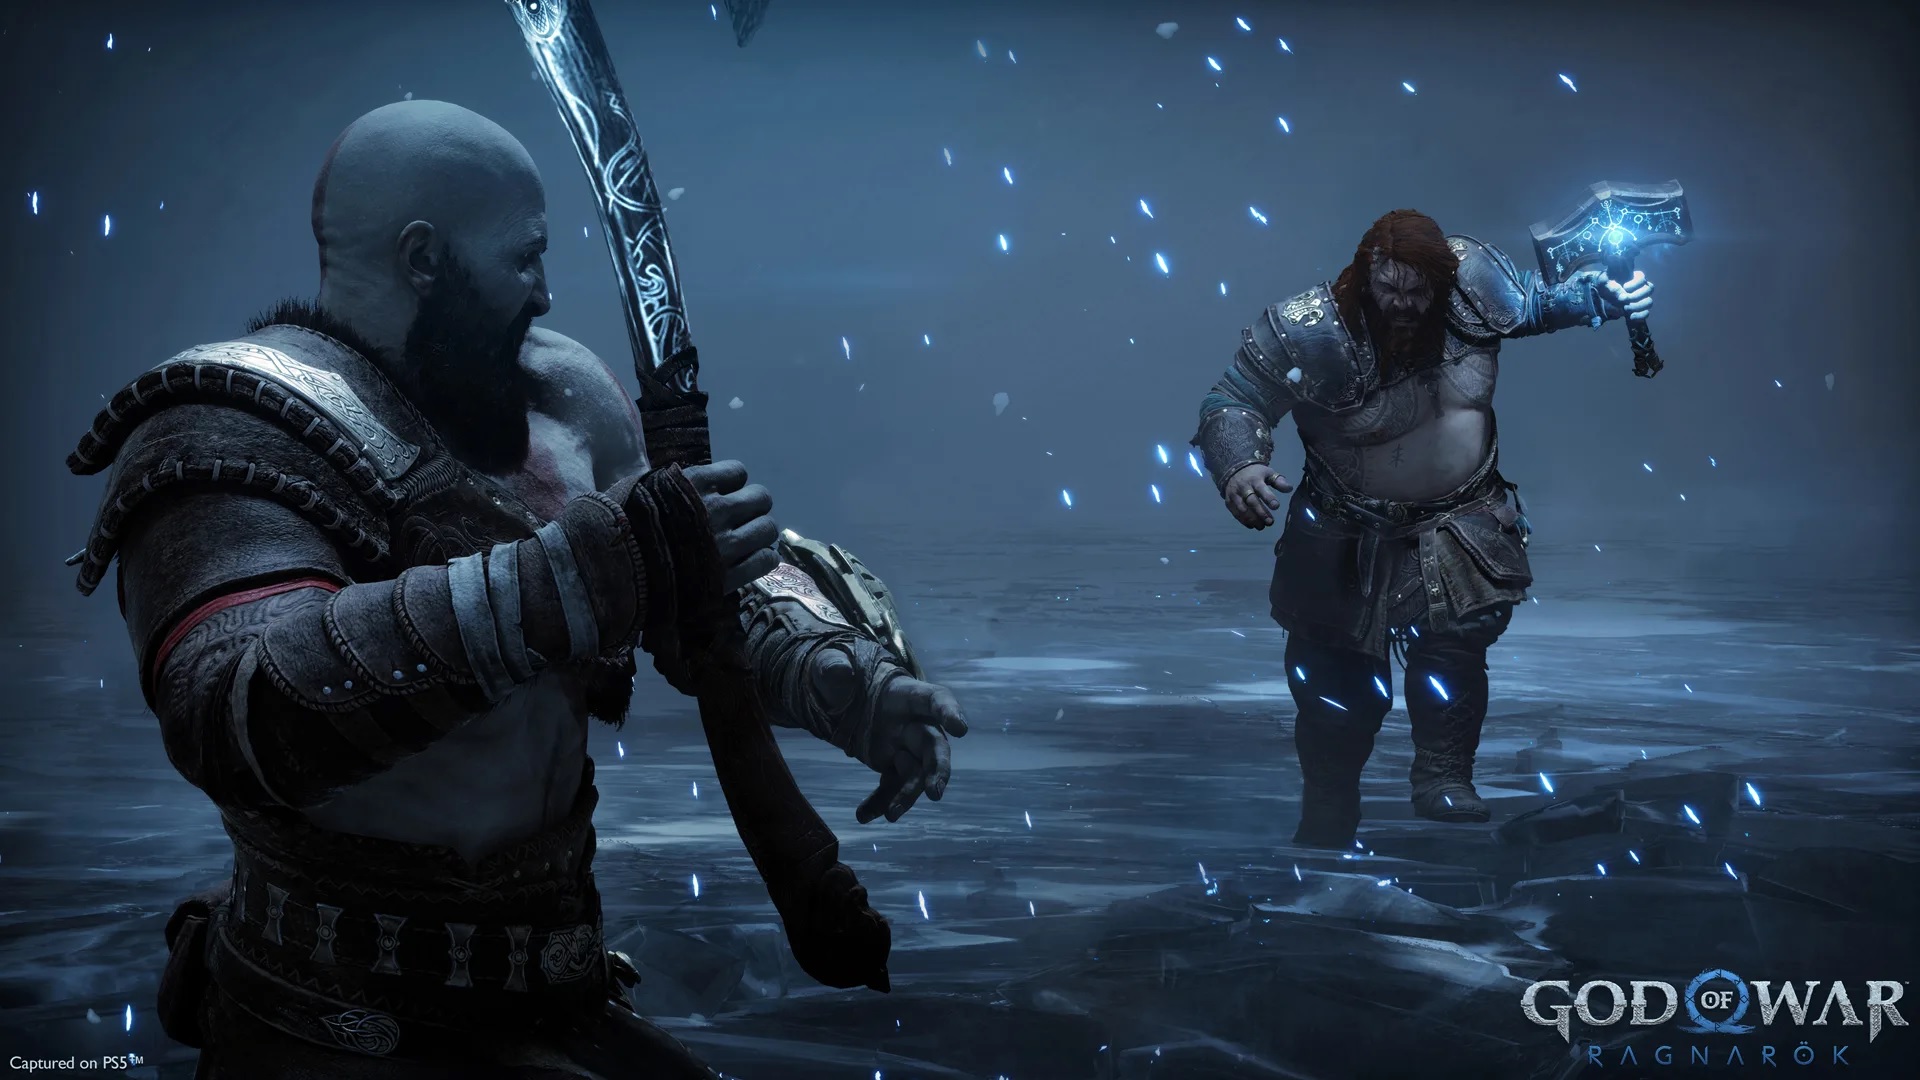 God of War Ragnarök launches on PS4 & PS5 November 9, 2022. : r/GodofWar